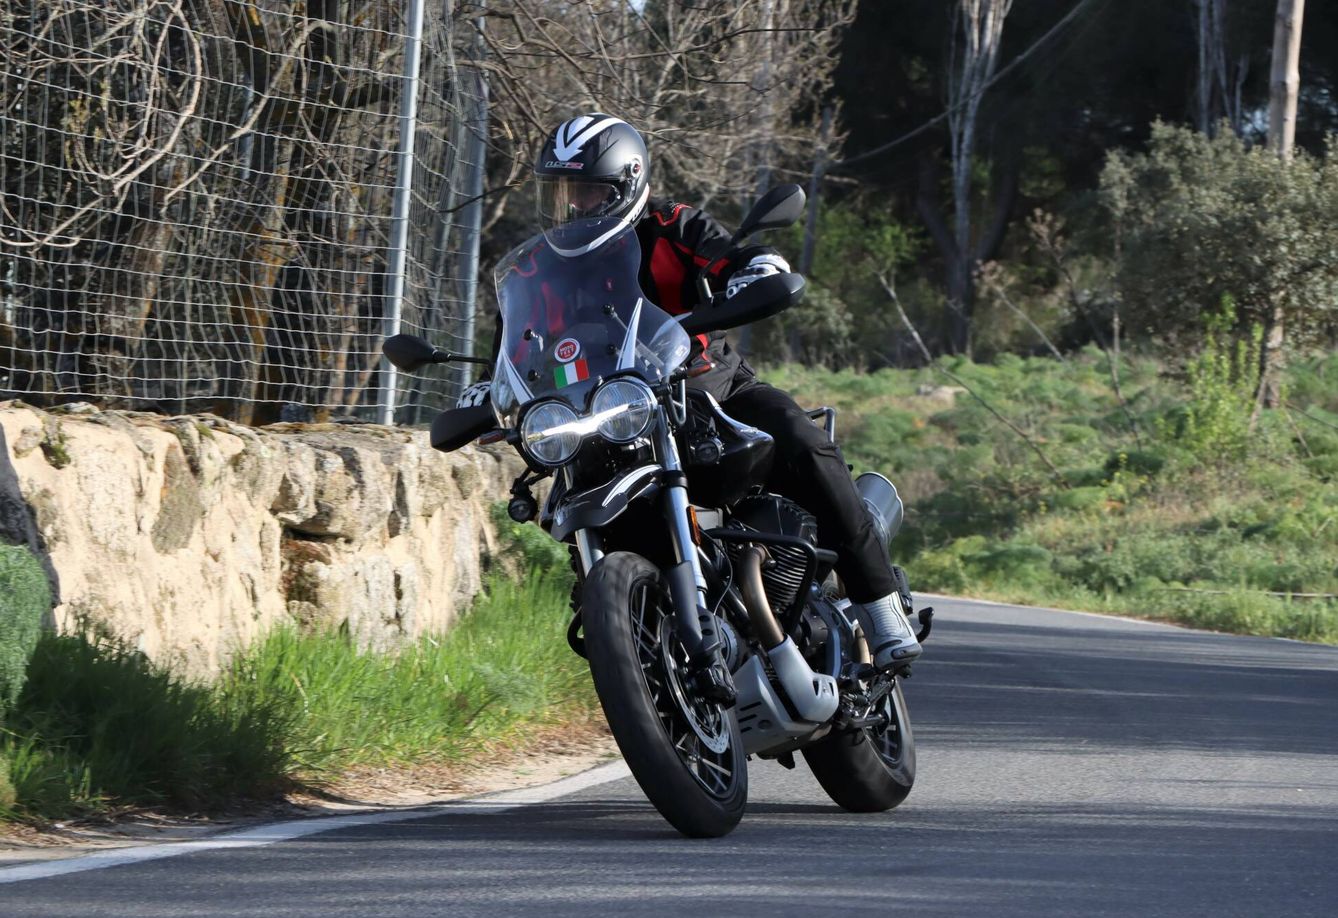 La Moto Guzzi V85 TT Guardia d’Onore se distingue por su elegancia.